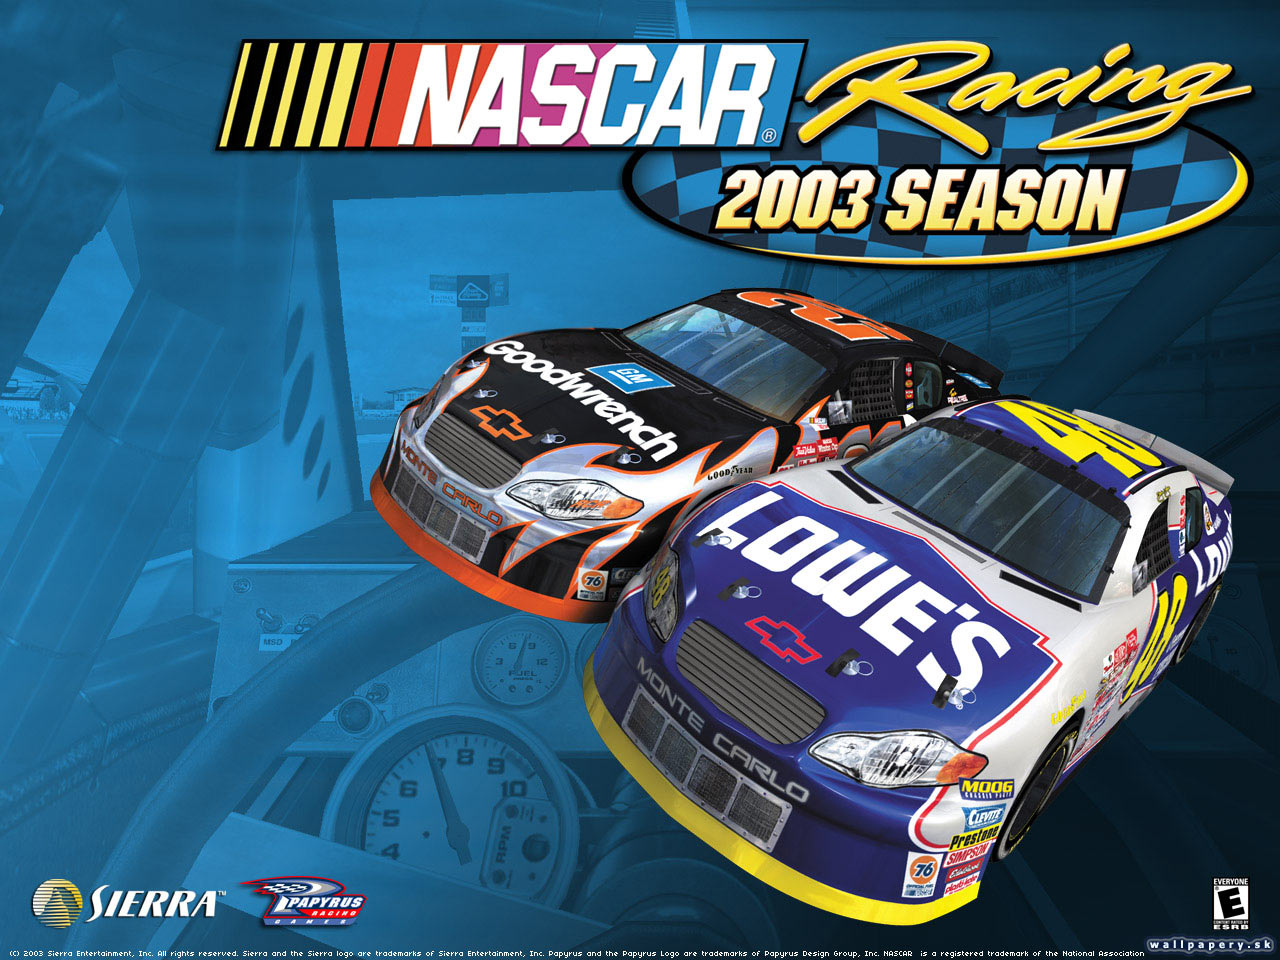 Nascar Racing 2003 Season - wallpaper 2